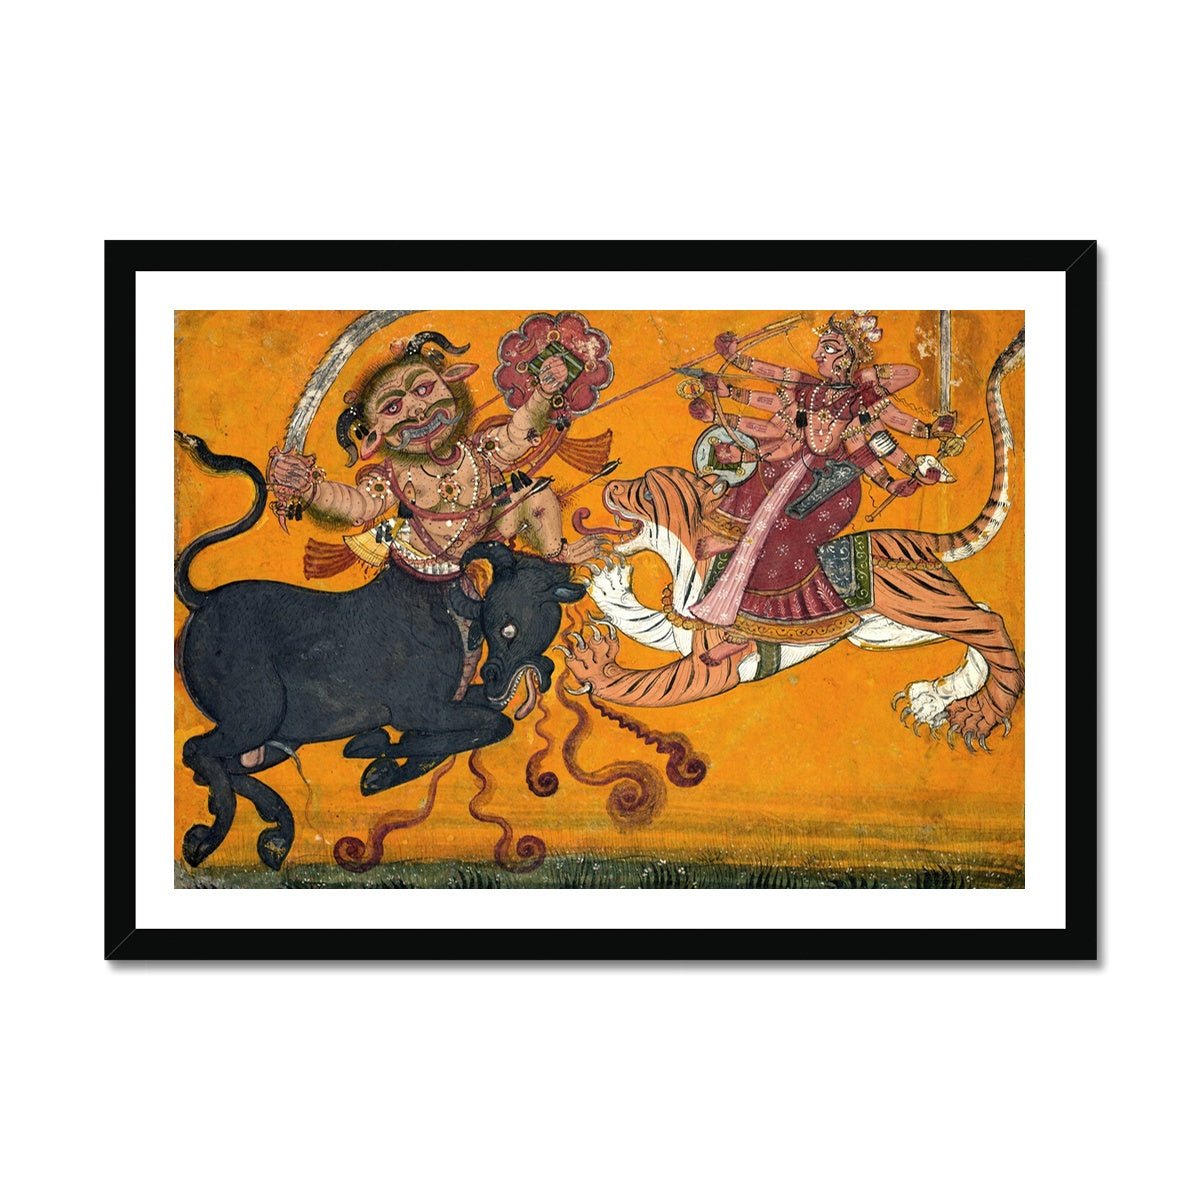 Fine art A4 Landscape / Black Frame Durga Slaying Mahisha: Feminine Strength & Empowerment Deity | Powerful Woman Protector Goddess Framed Art Print